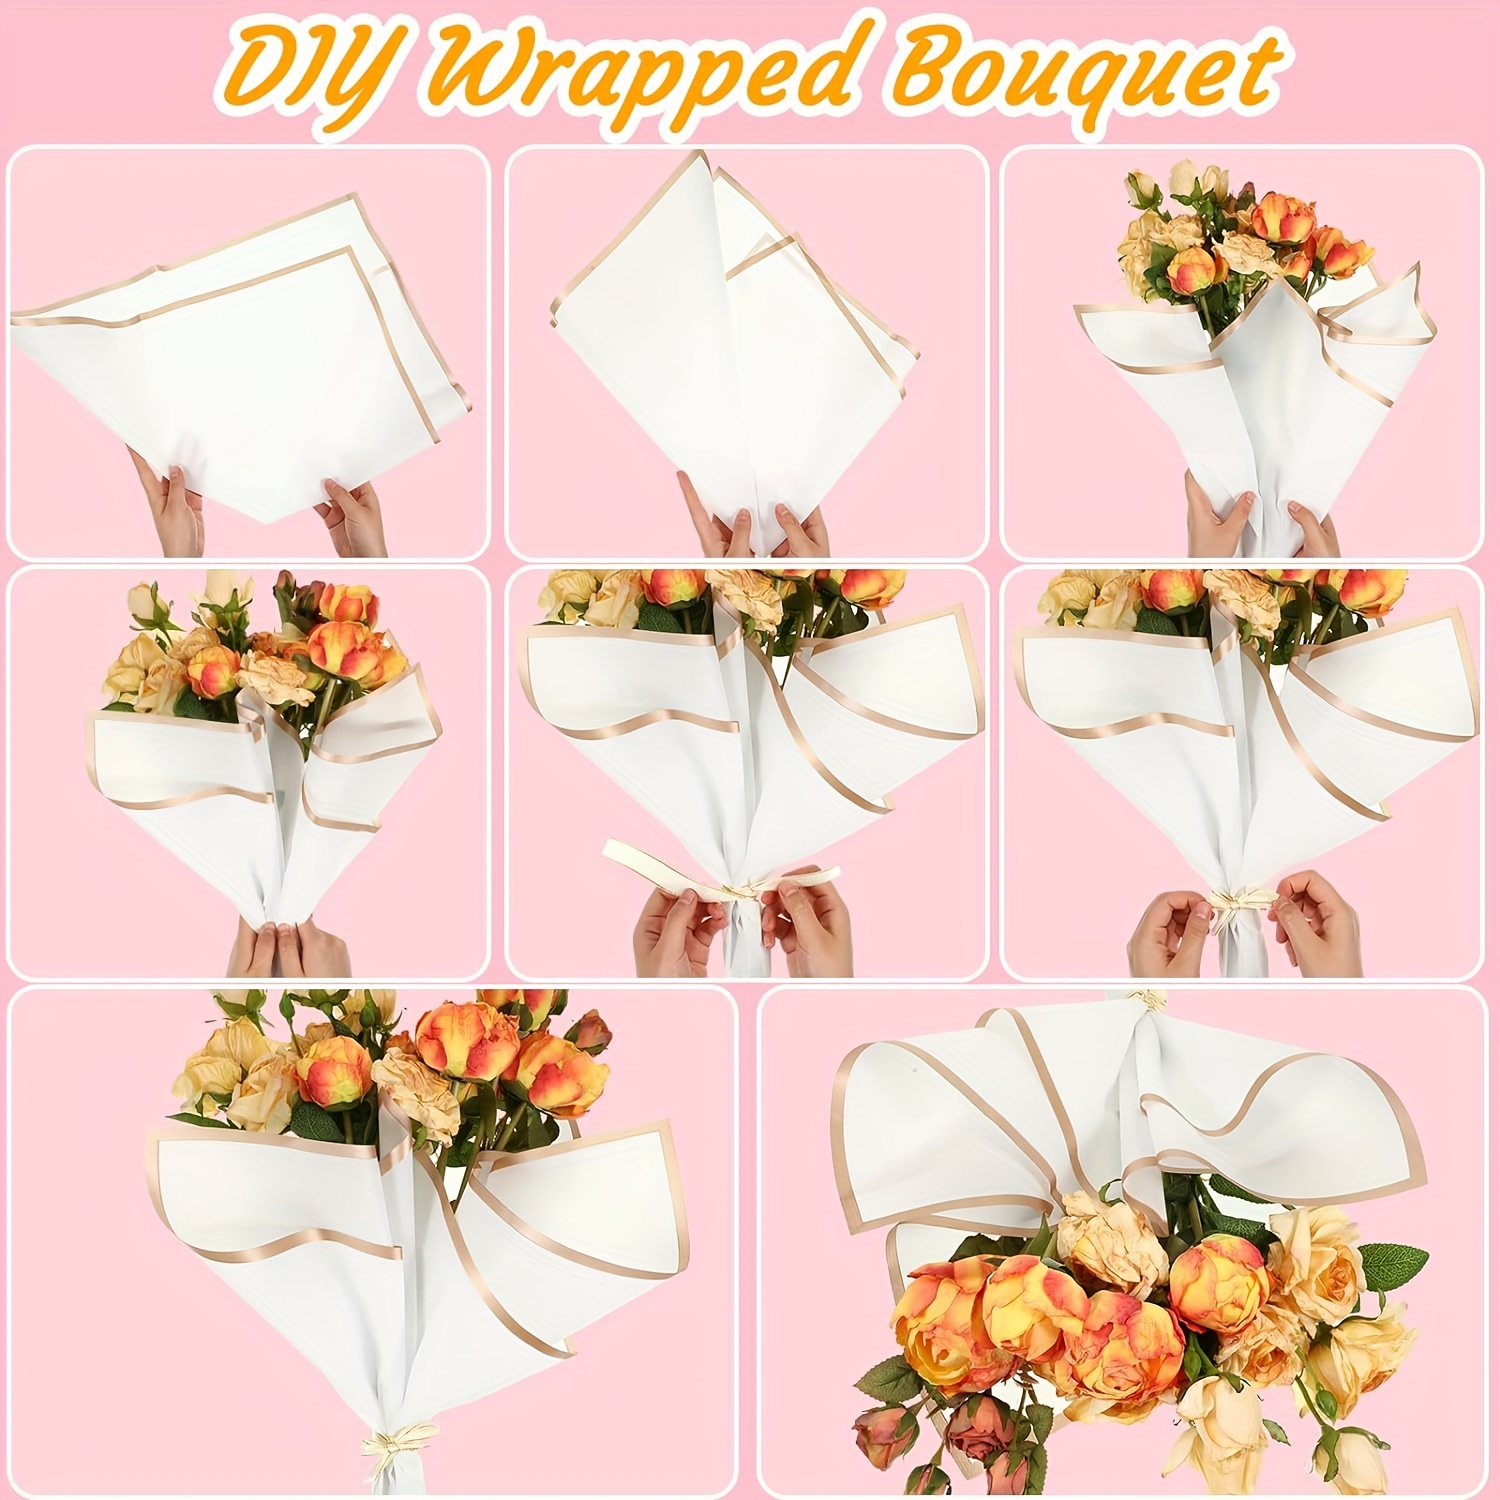 DODXIAOBEUL 20 Sheets Waterproof White Wrapping Flower Paper,Florist Supplies Bouquet Paper DIY Crafts,Floral Wrapping Paper Sheets Frosted Bouquet